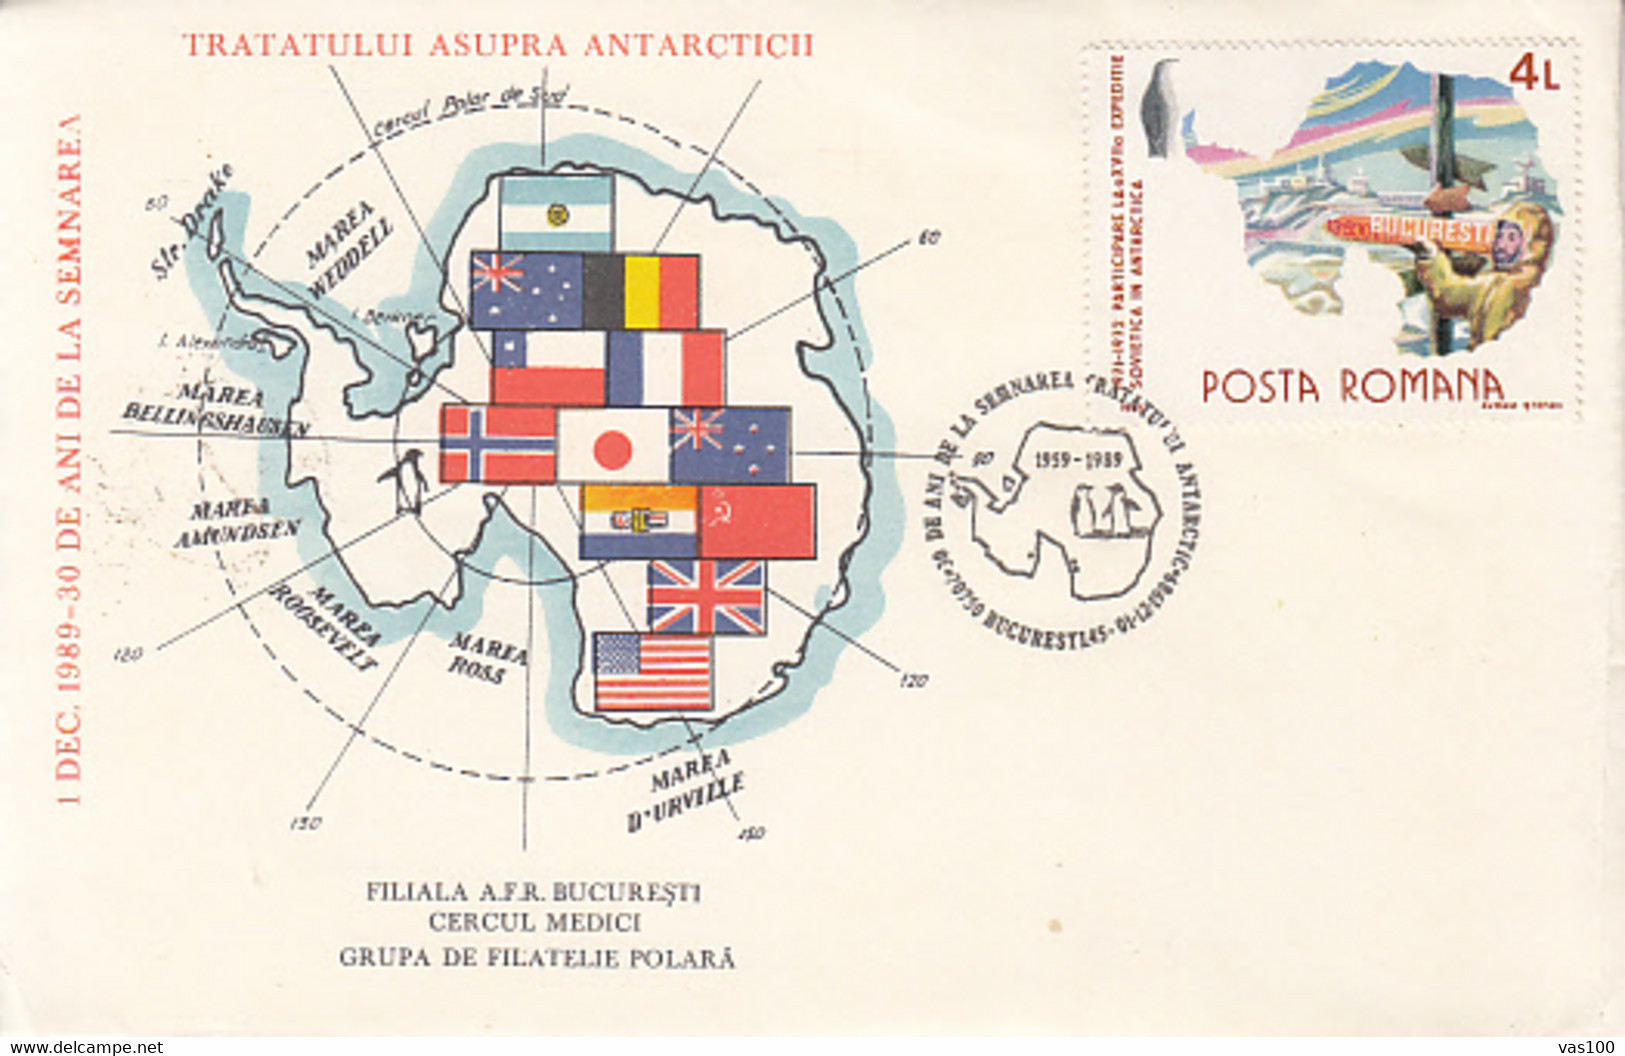 SOUTH POLE, ANTARCTIC TREATY, SPECIAL COVER, 1989, ROMANIA - Tratado Antártico